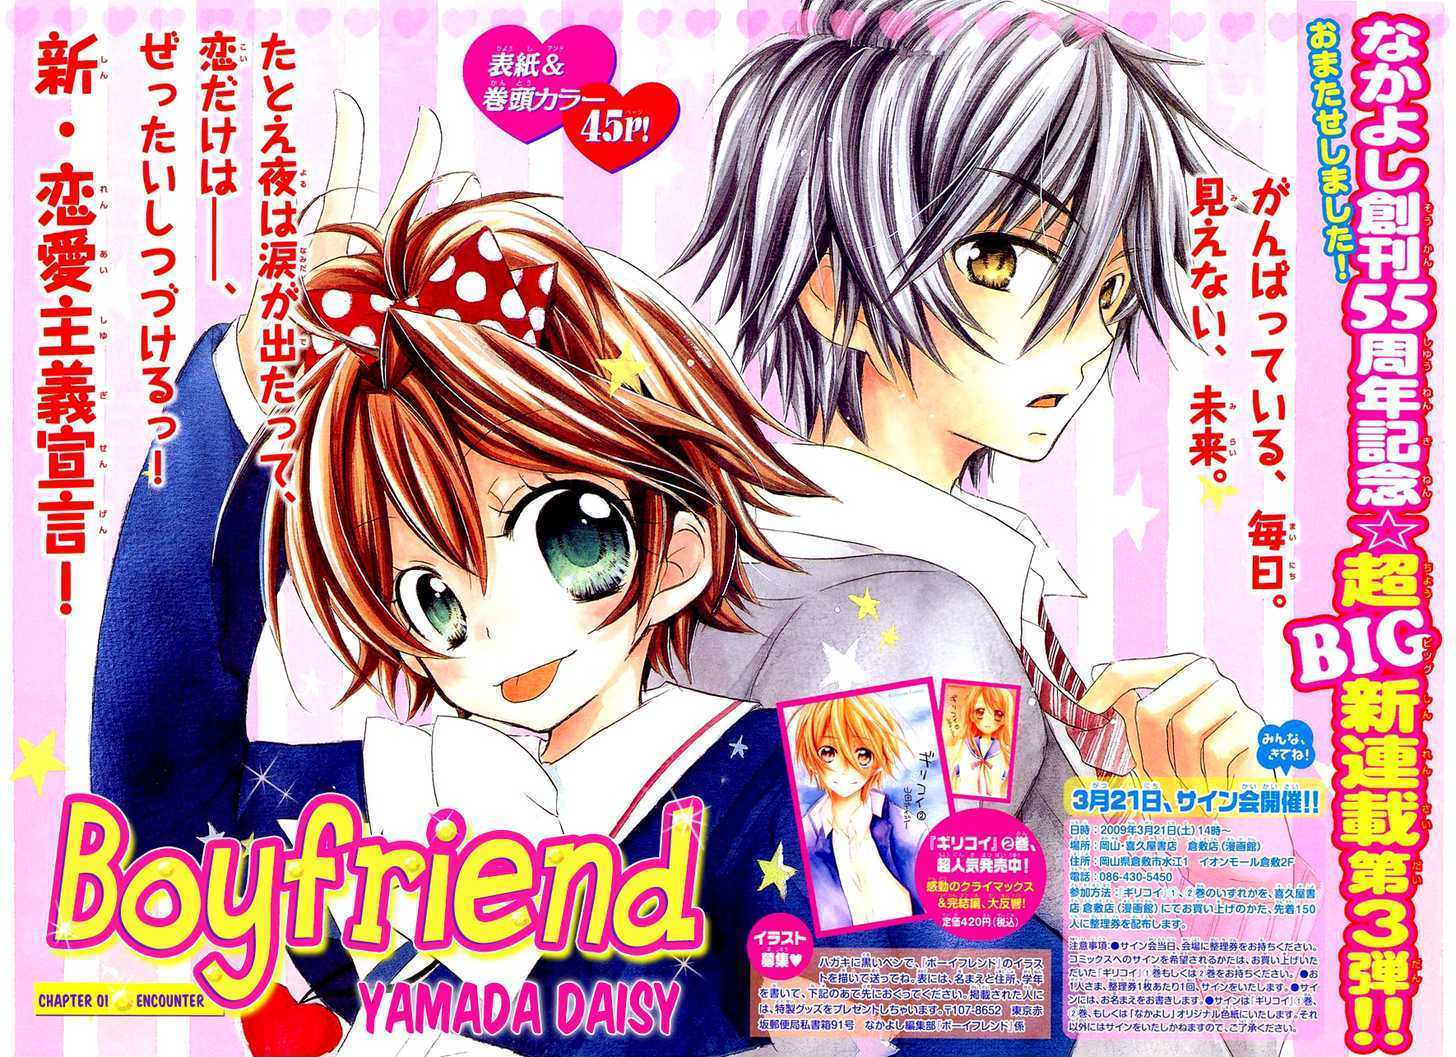 Boyfriend (Yamada Daisy) Vol.1 Chapter 1 : Encounter - Picture 3